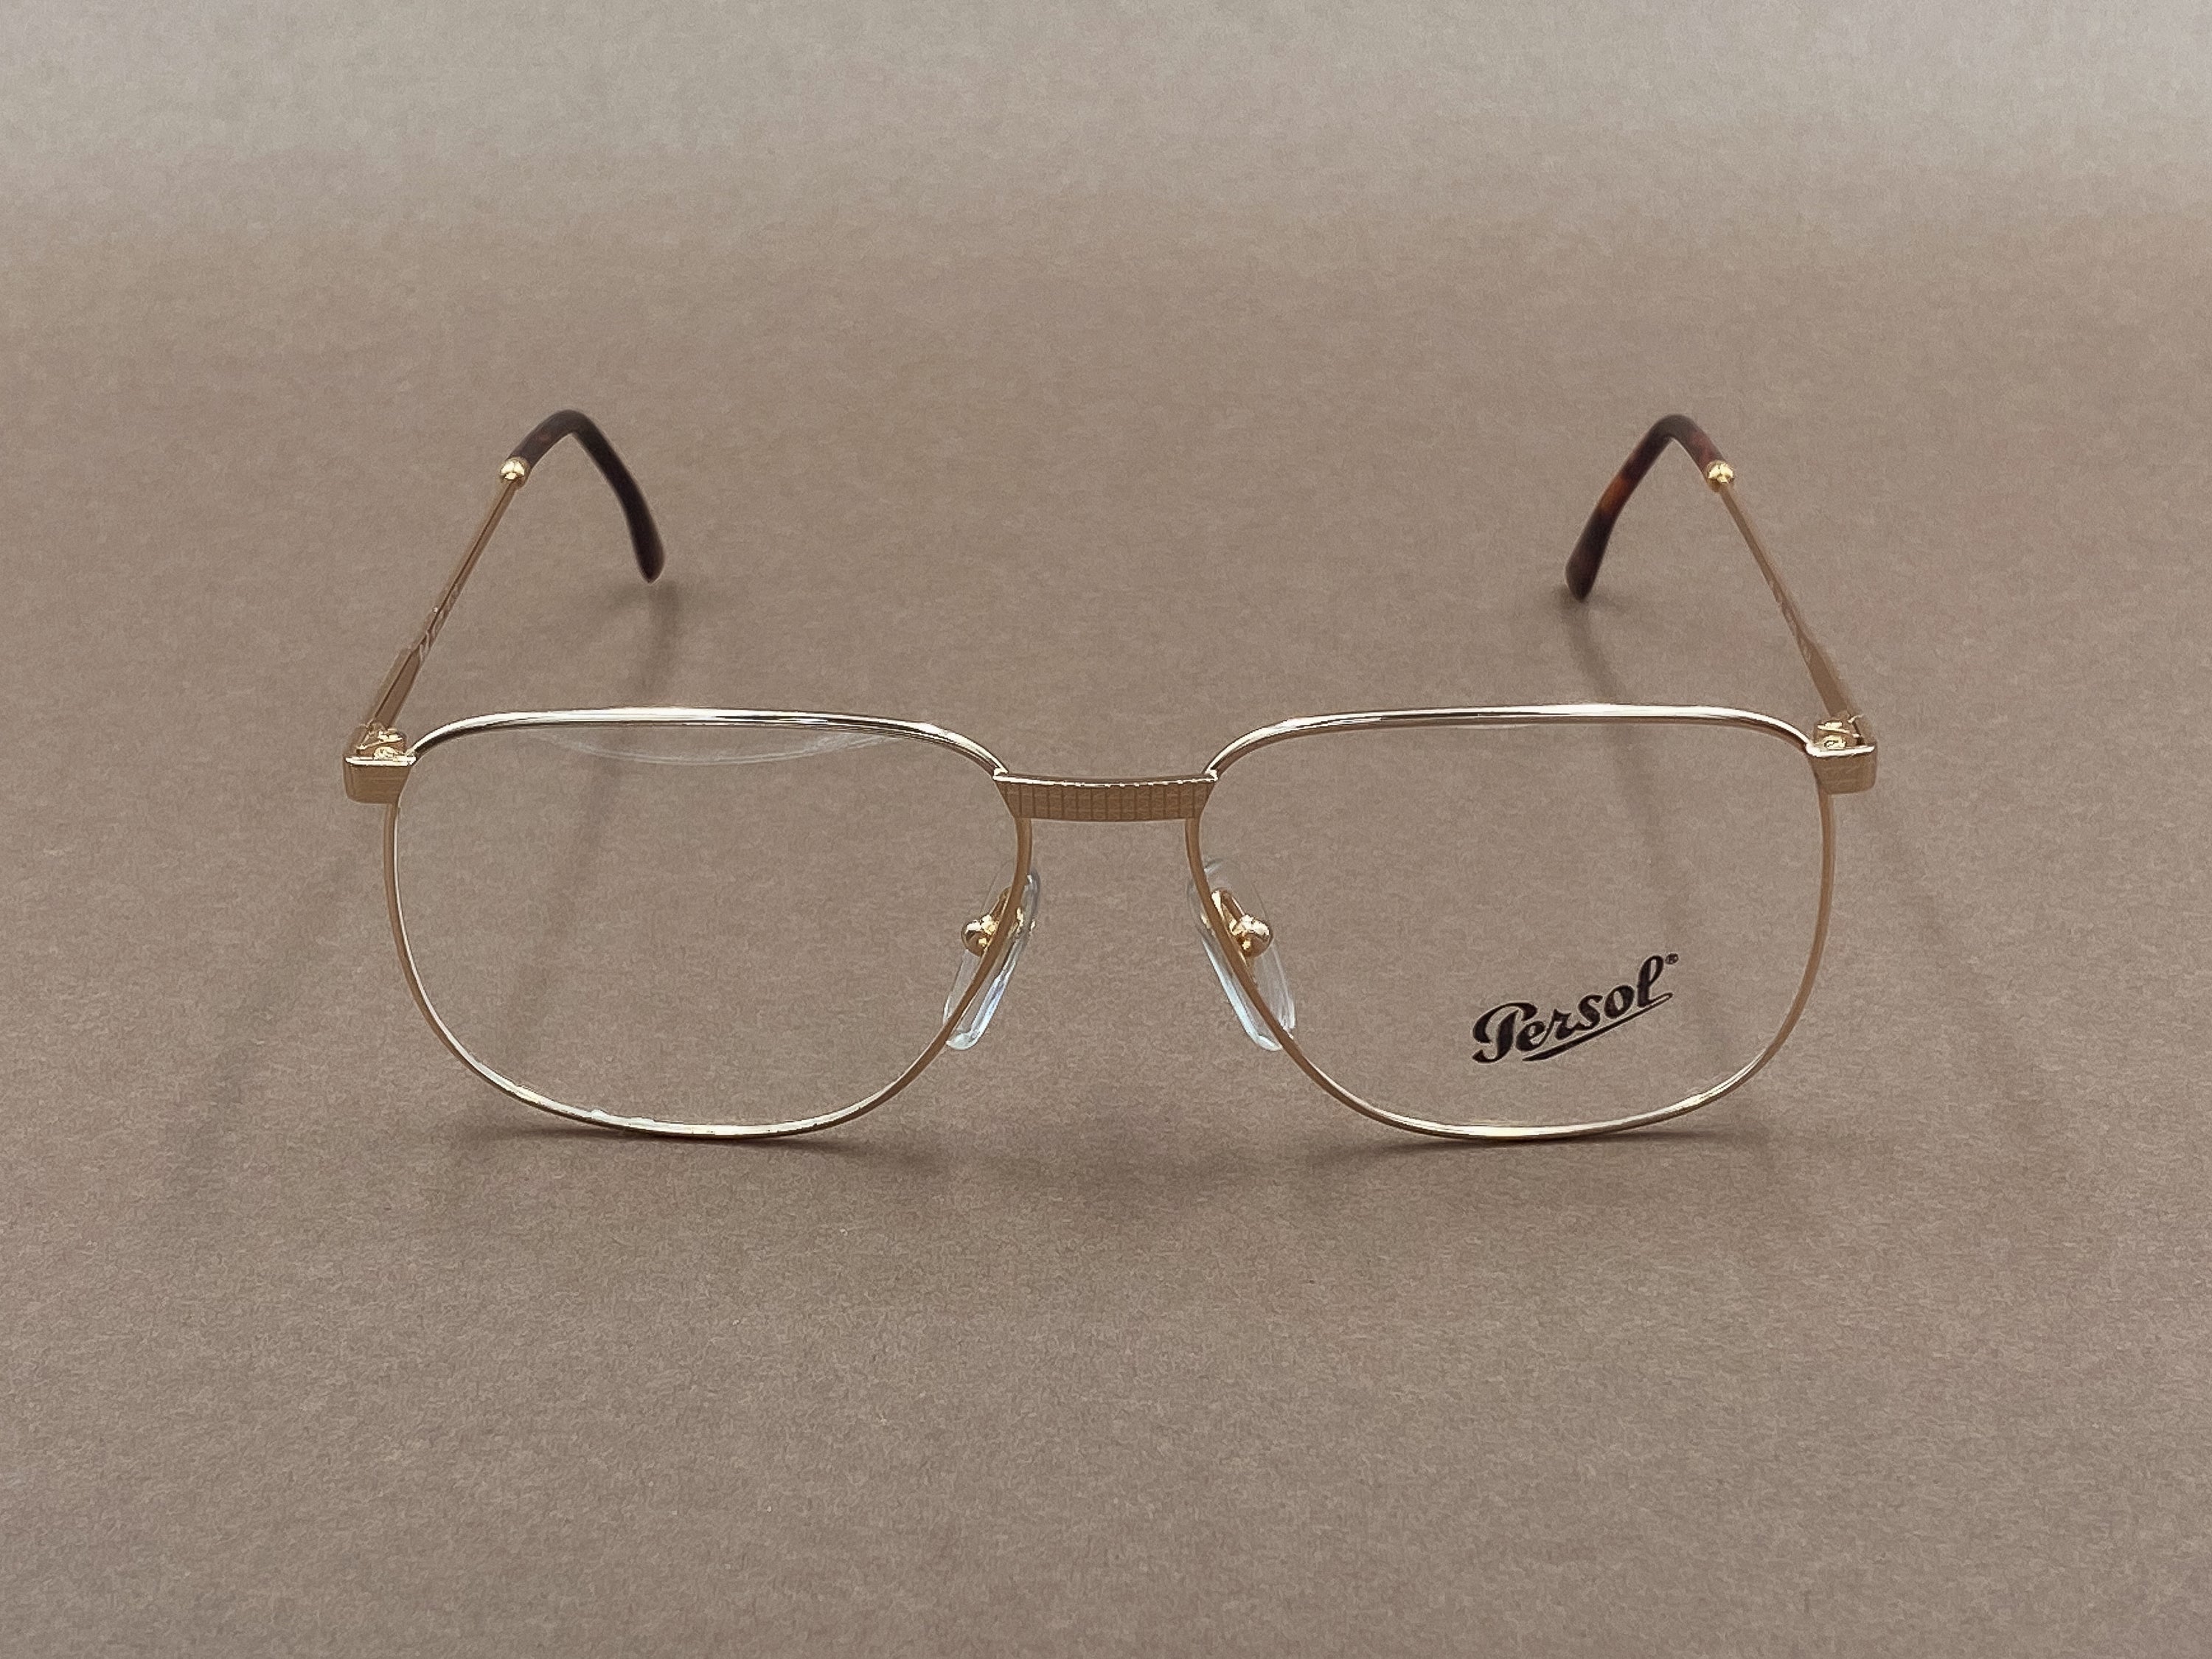 Persol Miller DB glasses